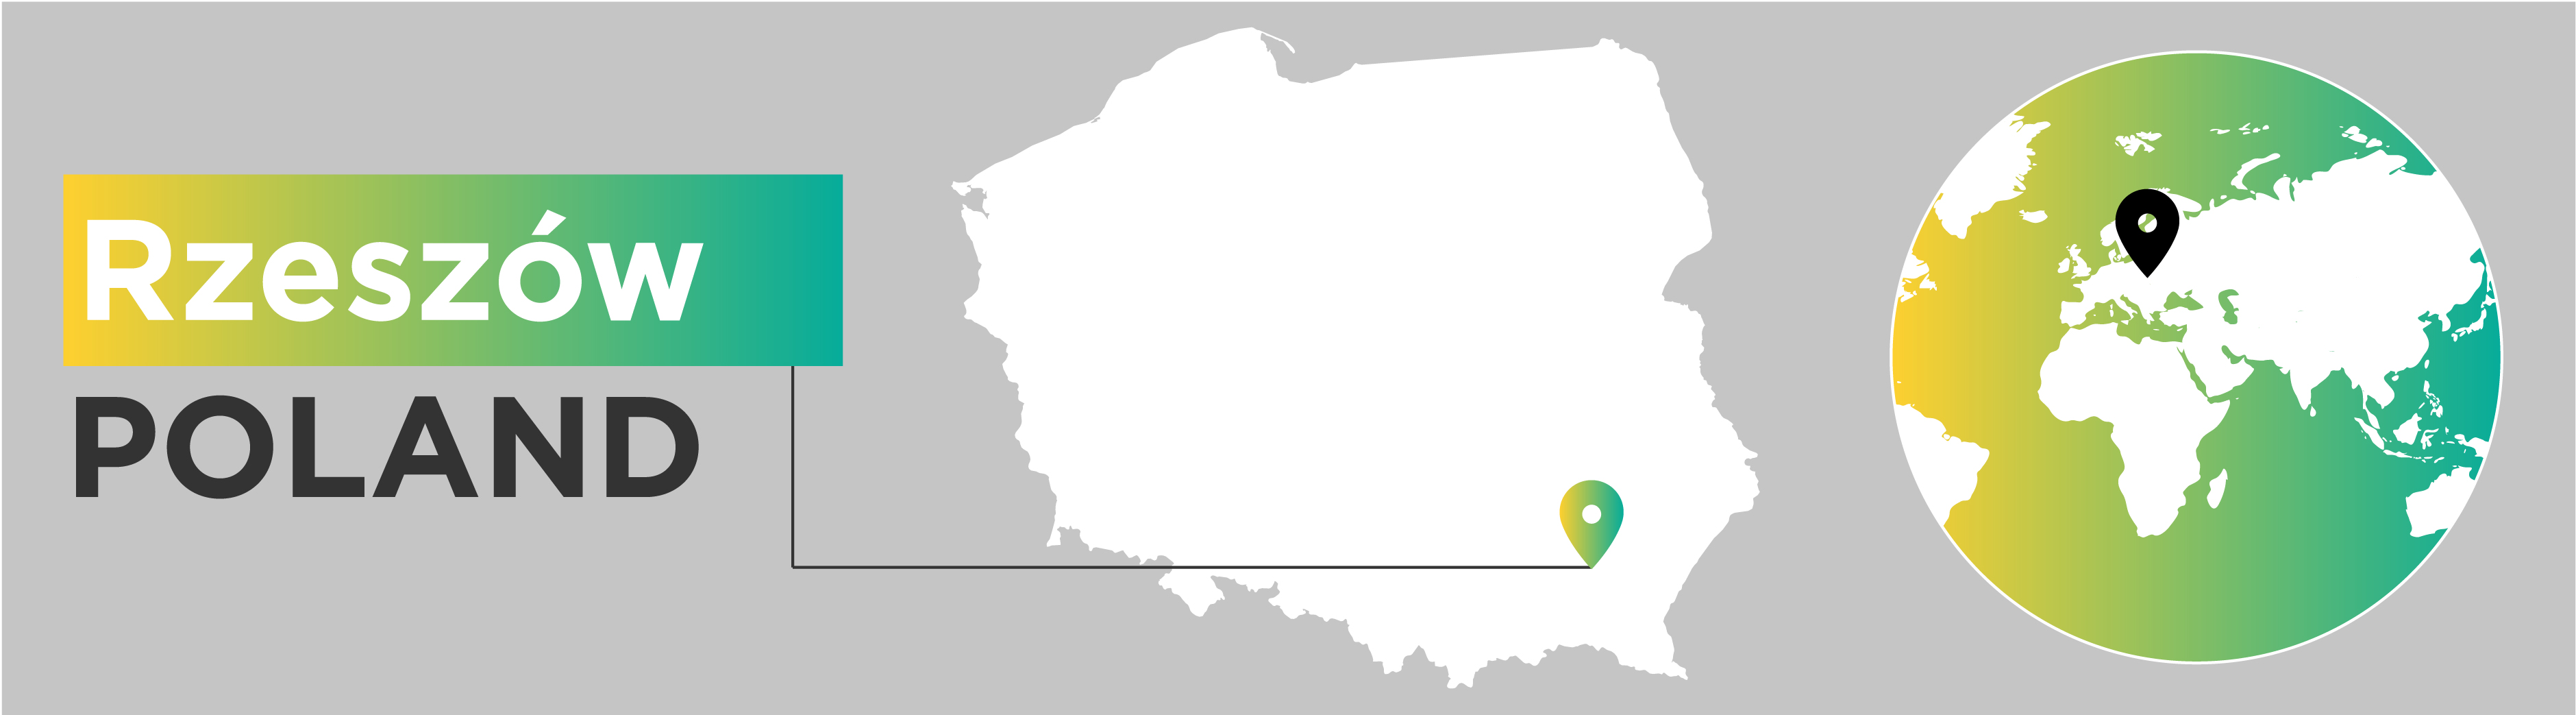 Map locating the city of Rzeszów in Poland